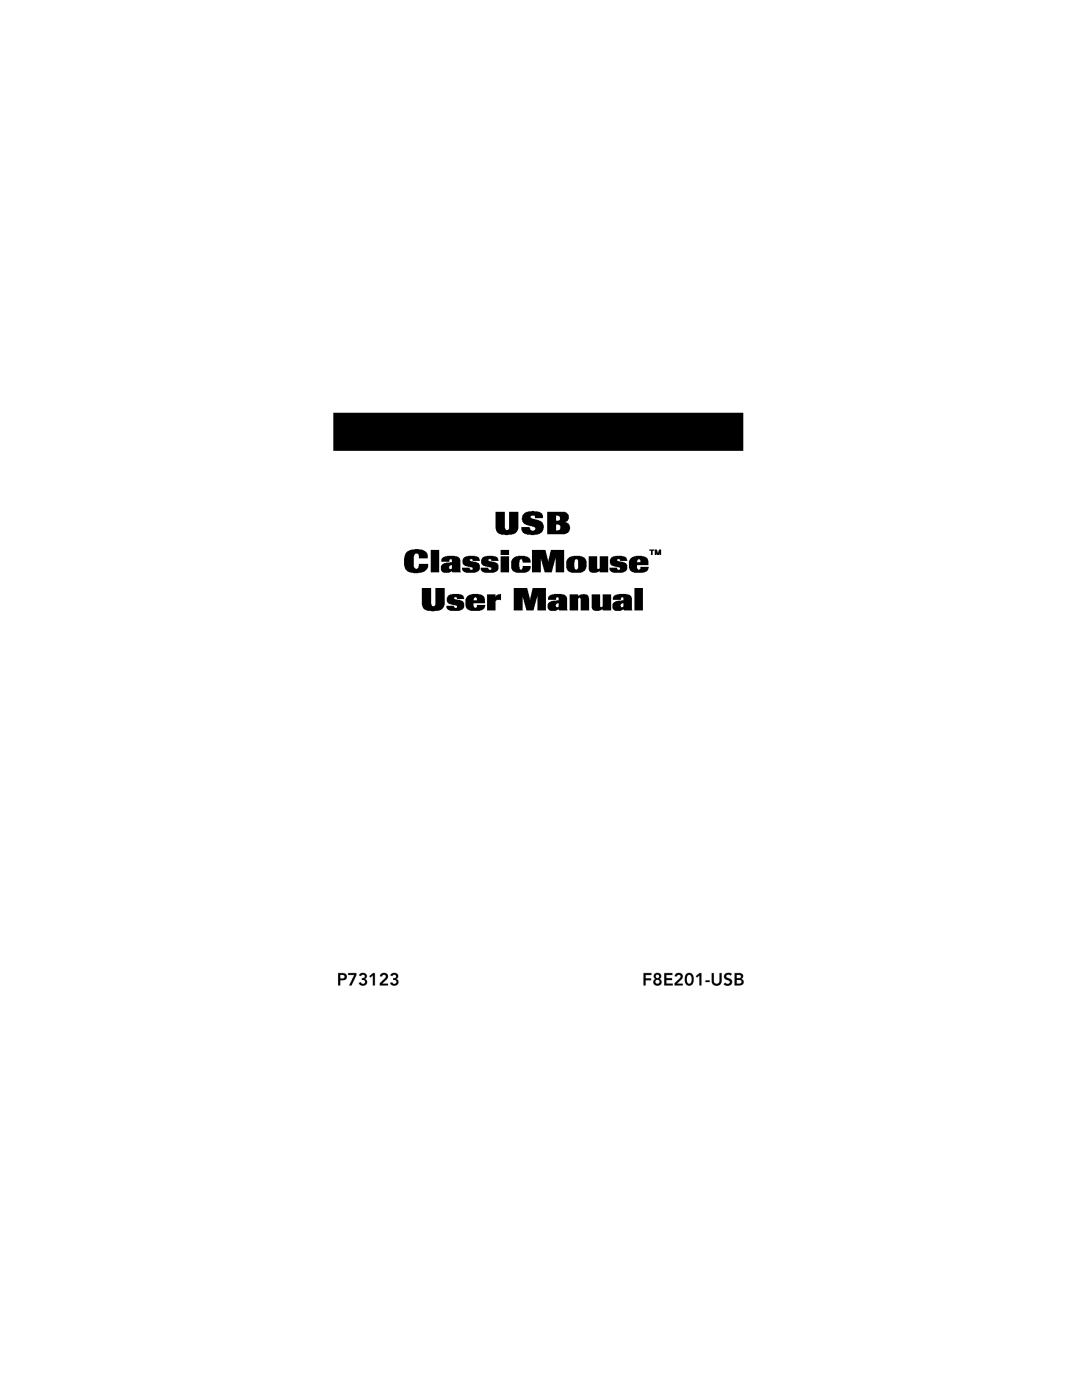 Belkin user manual P73123, F8E201-USB, USB ClassicMouse User Manual 